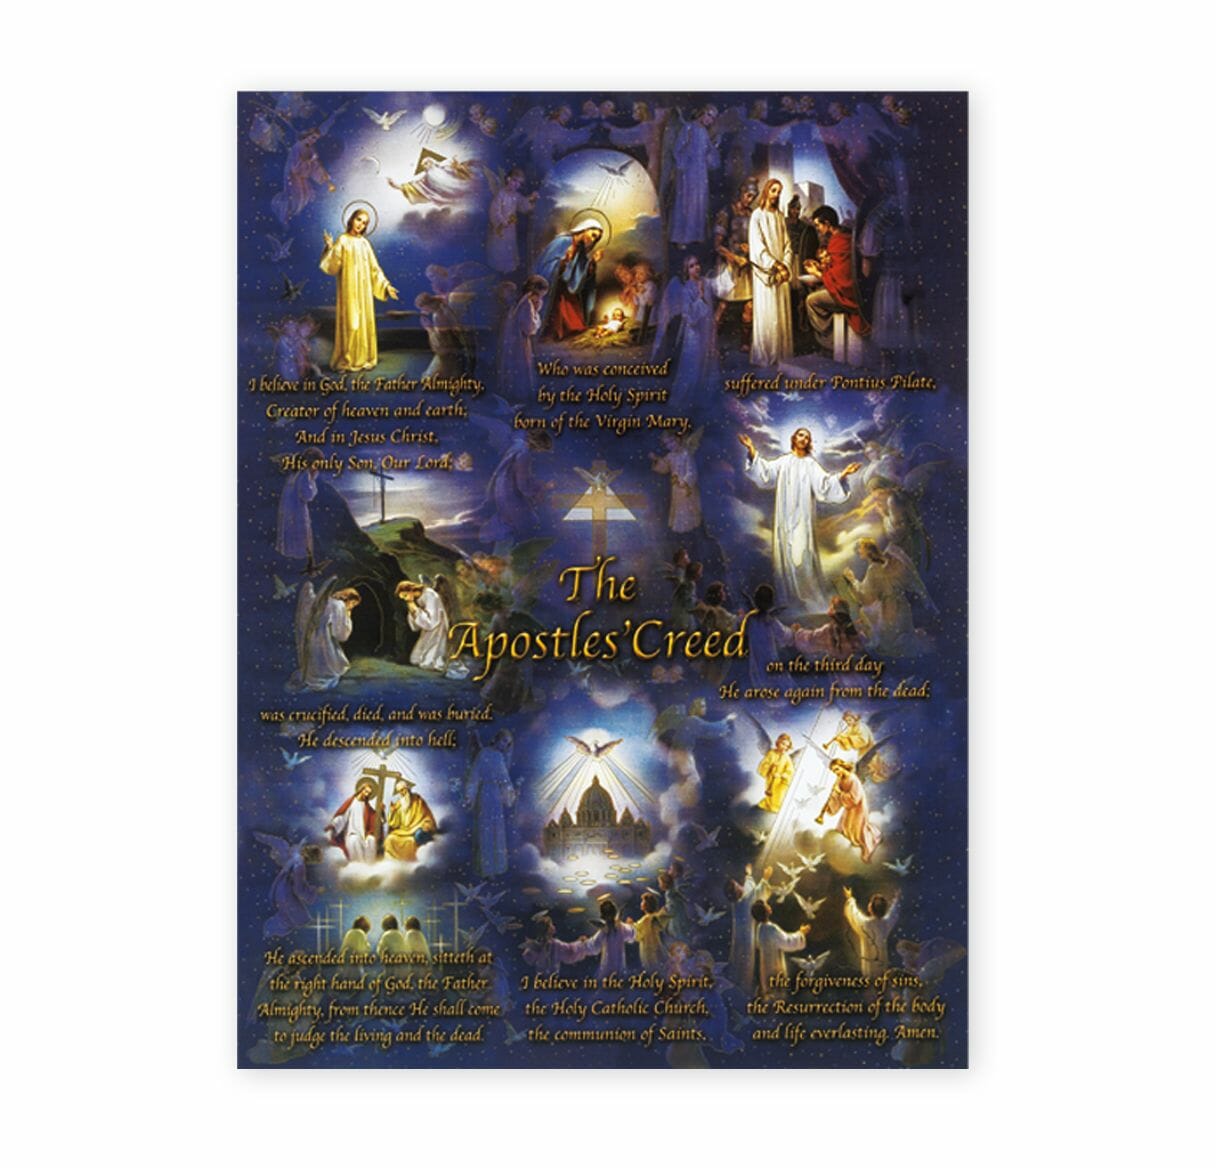 Apostles Creed Italian Lithograph - Buy Religious Catholic Store